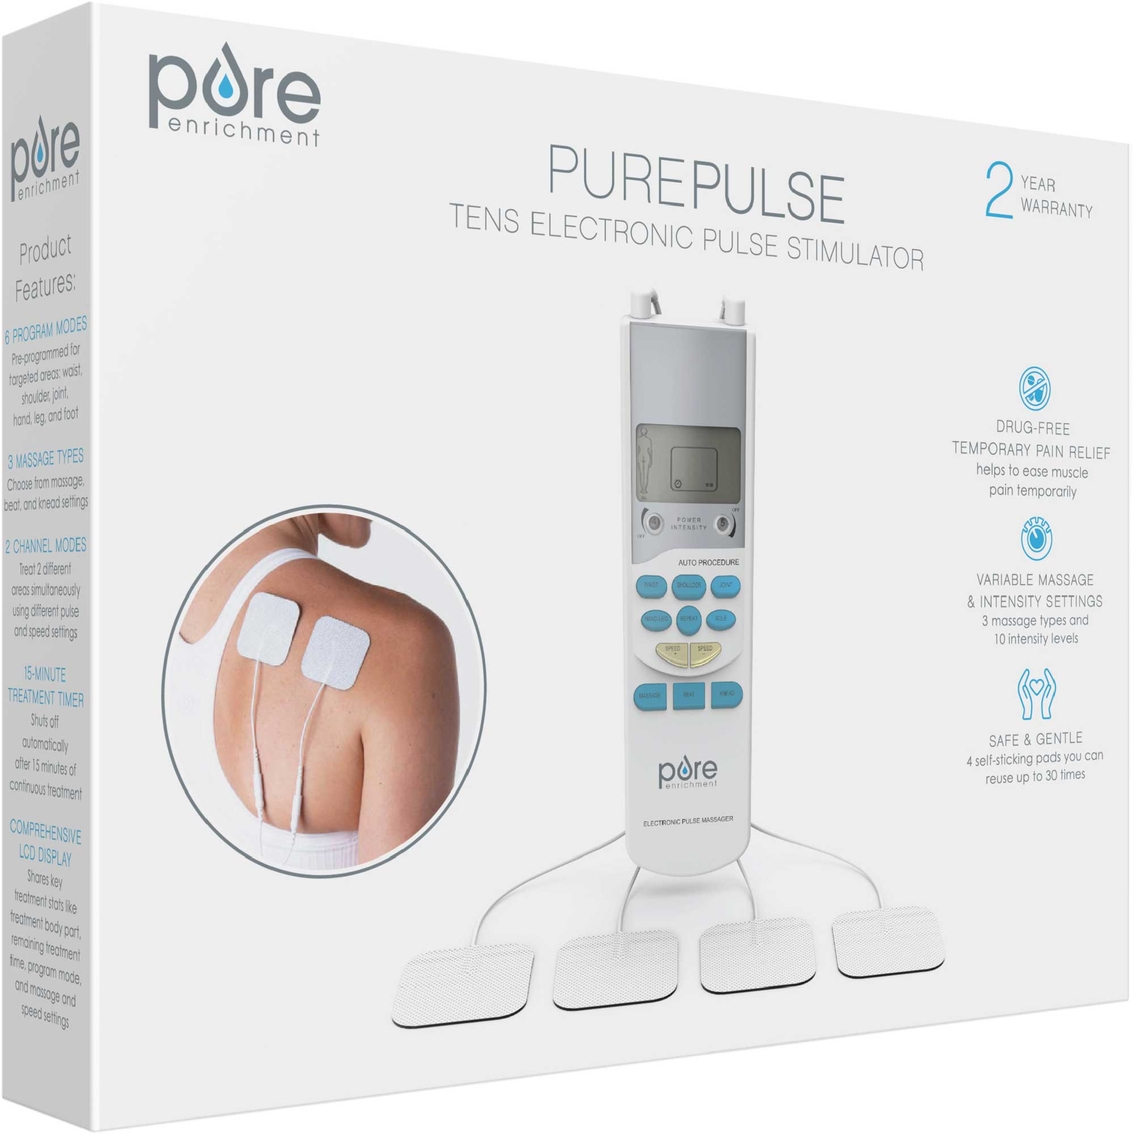 Pure Enrichment PurePulse TENS Electronic Pulse Massager - Image 6 of 6